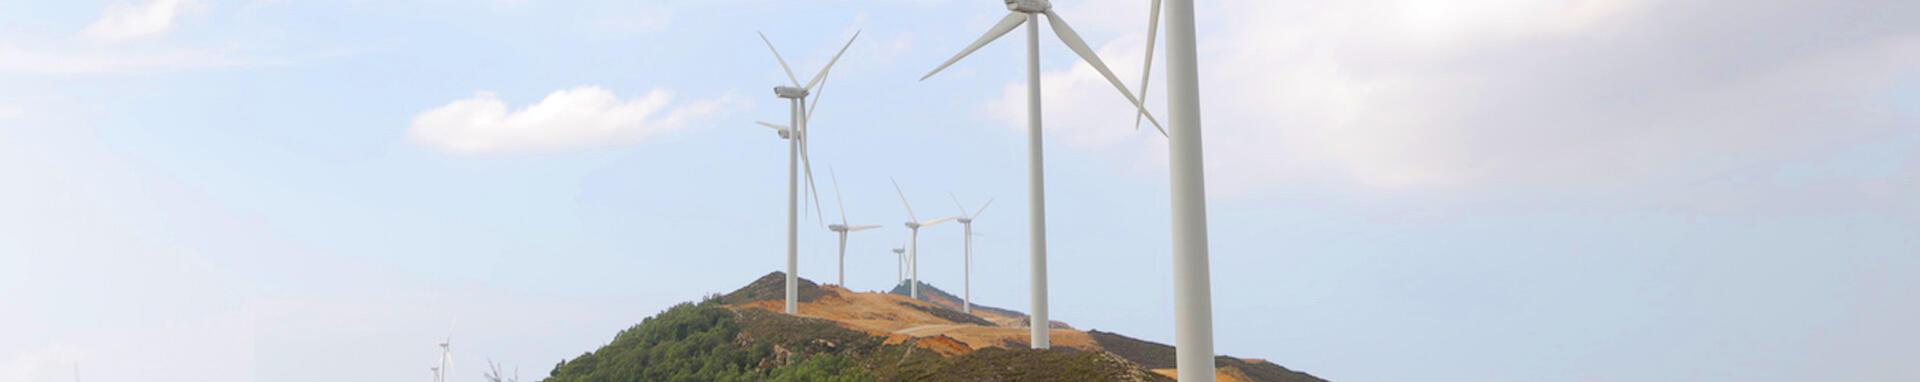 CIF Action Khalladi Wind Farm in Tangier, Morocco. 2018